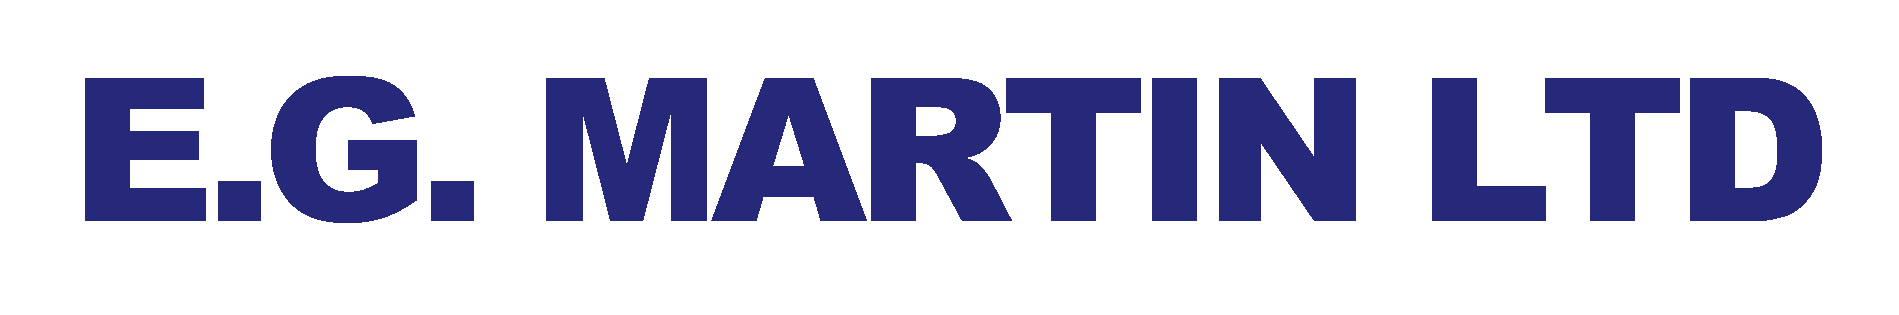 eg martin ltd logo